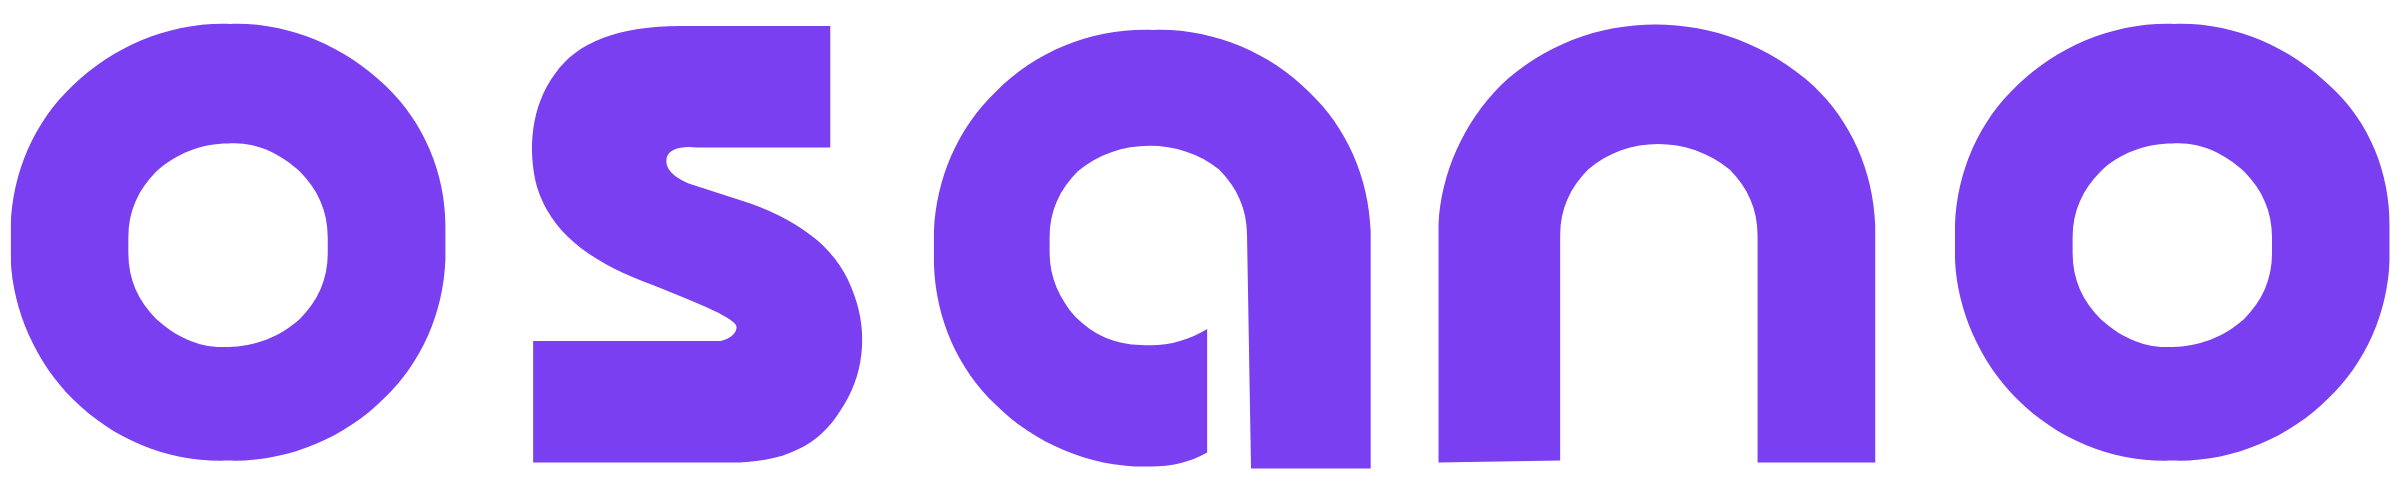 Osano Logo - High Res.png